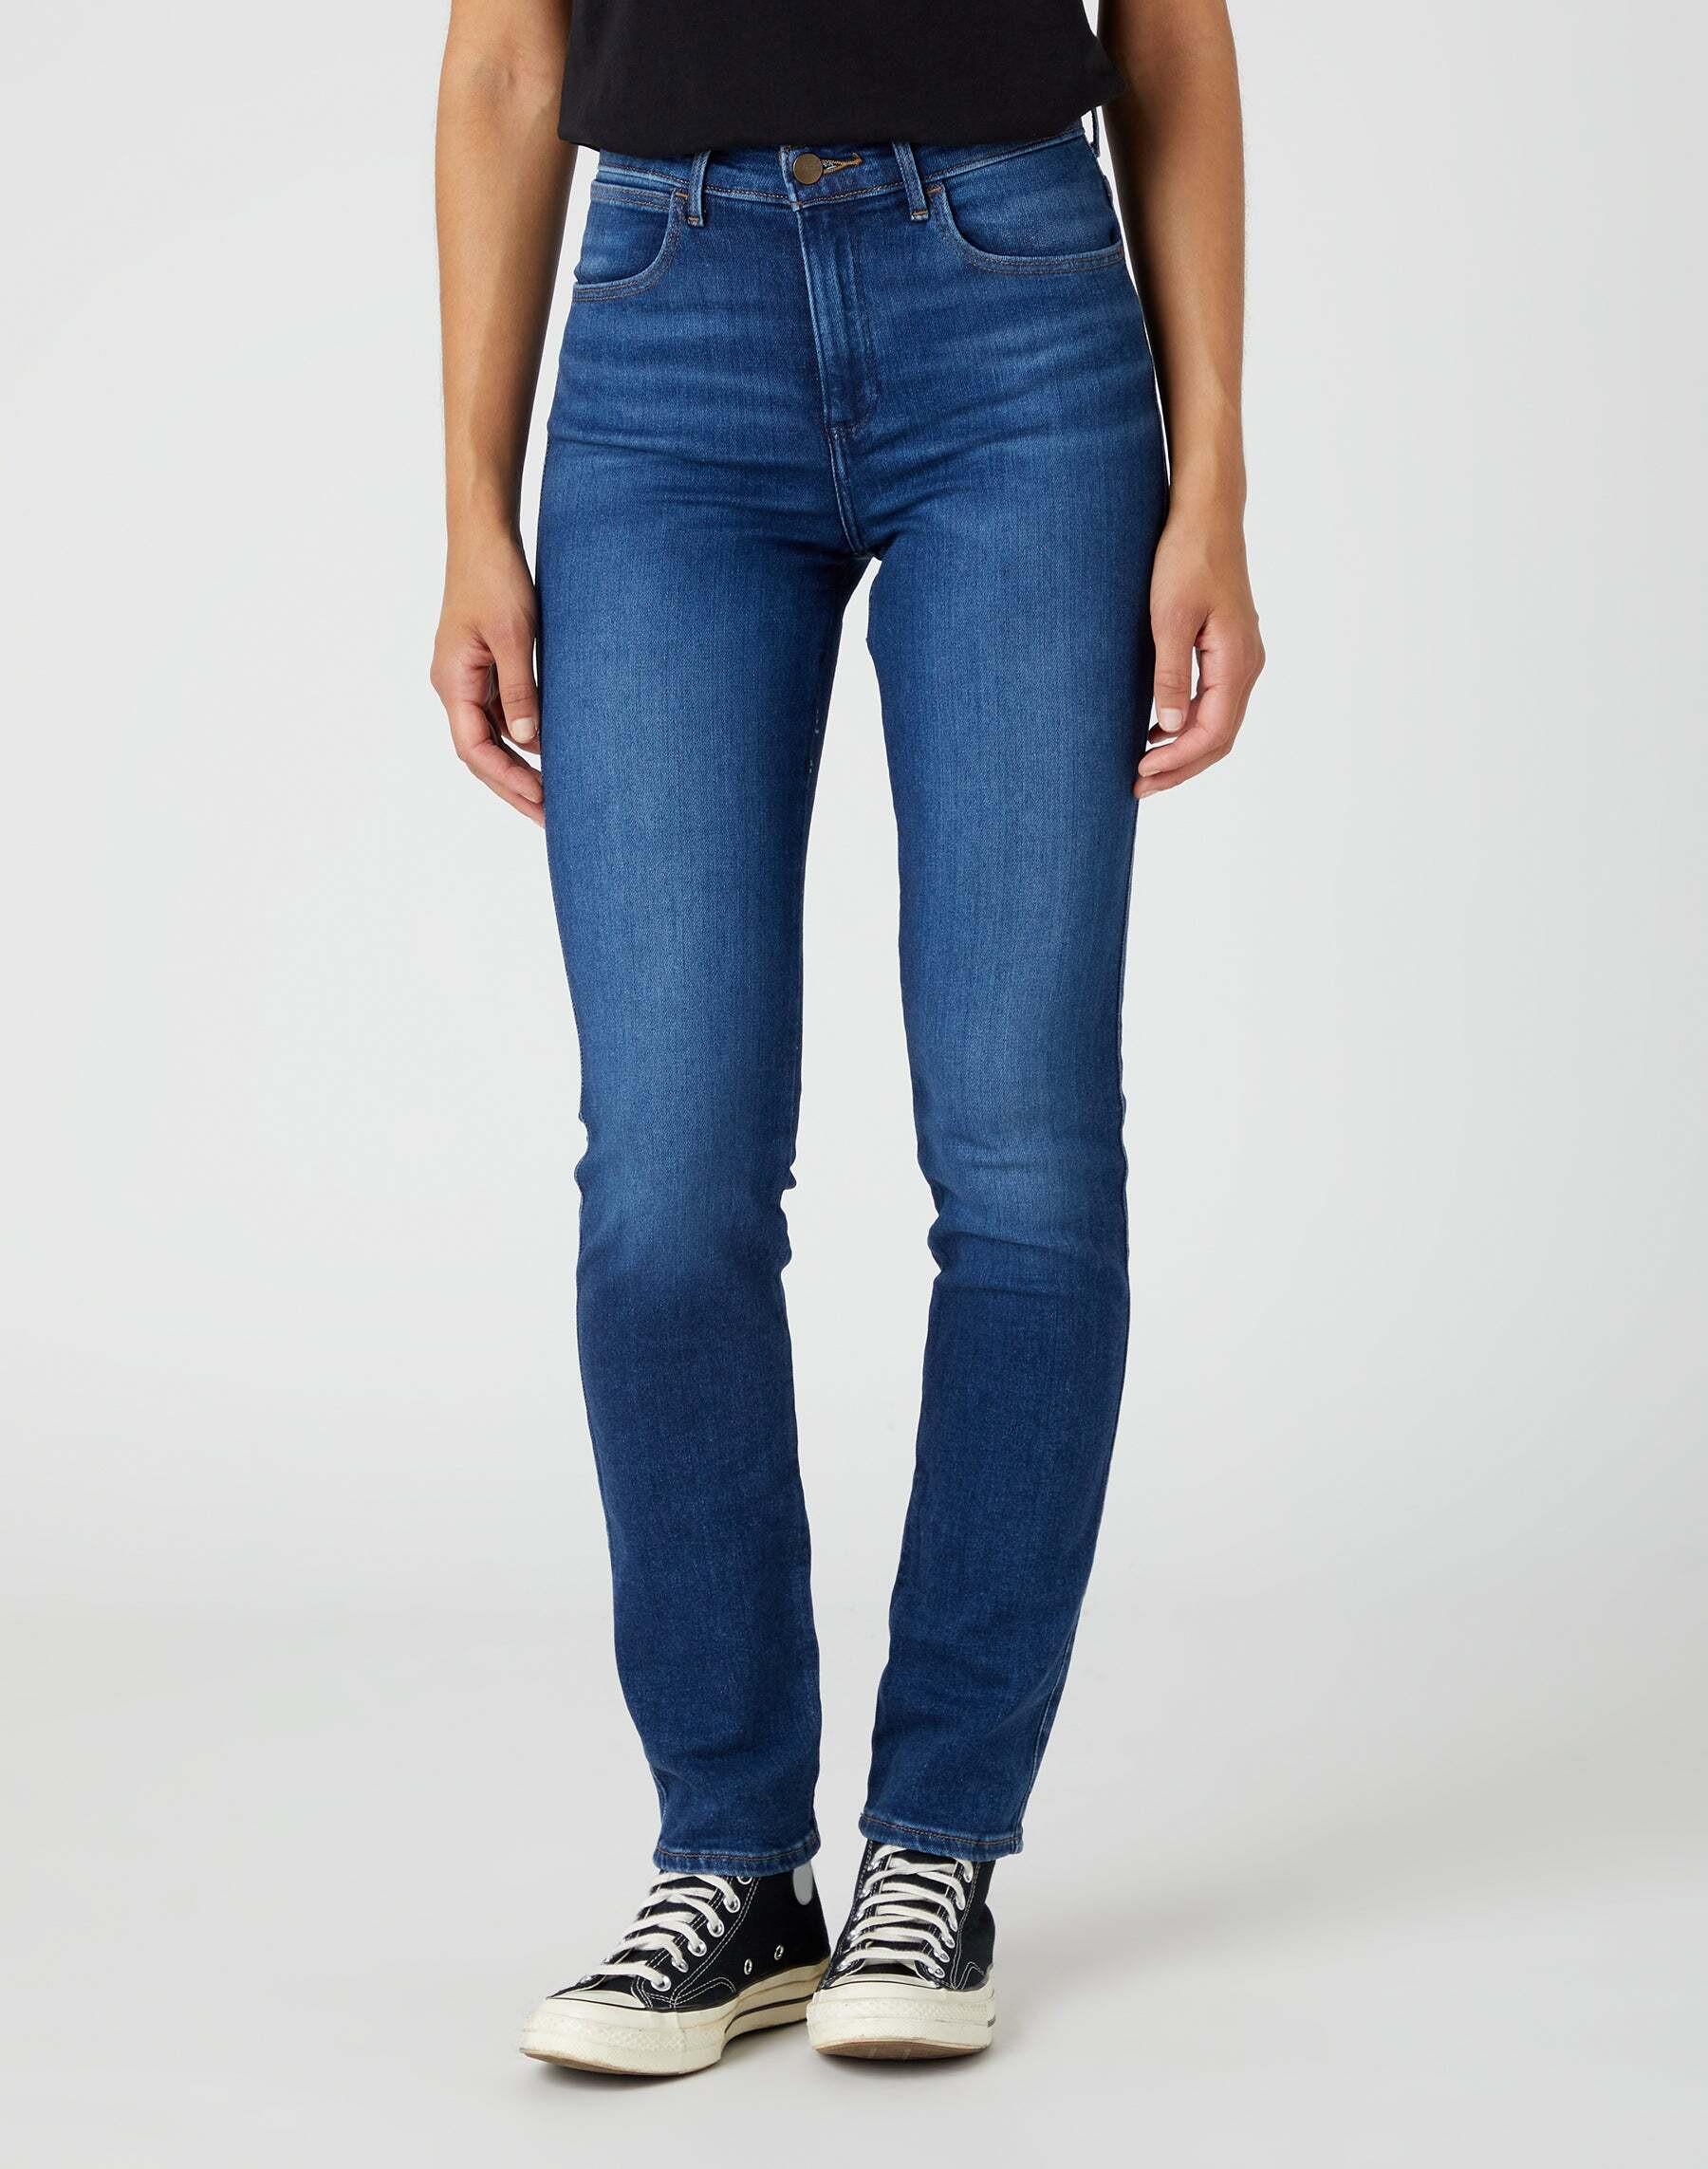 Jeans Slim Damen Blau Denim L30/W28 von Wrangler